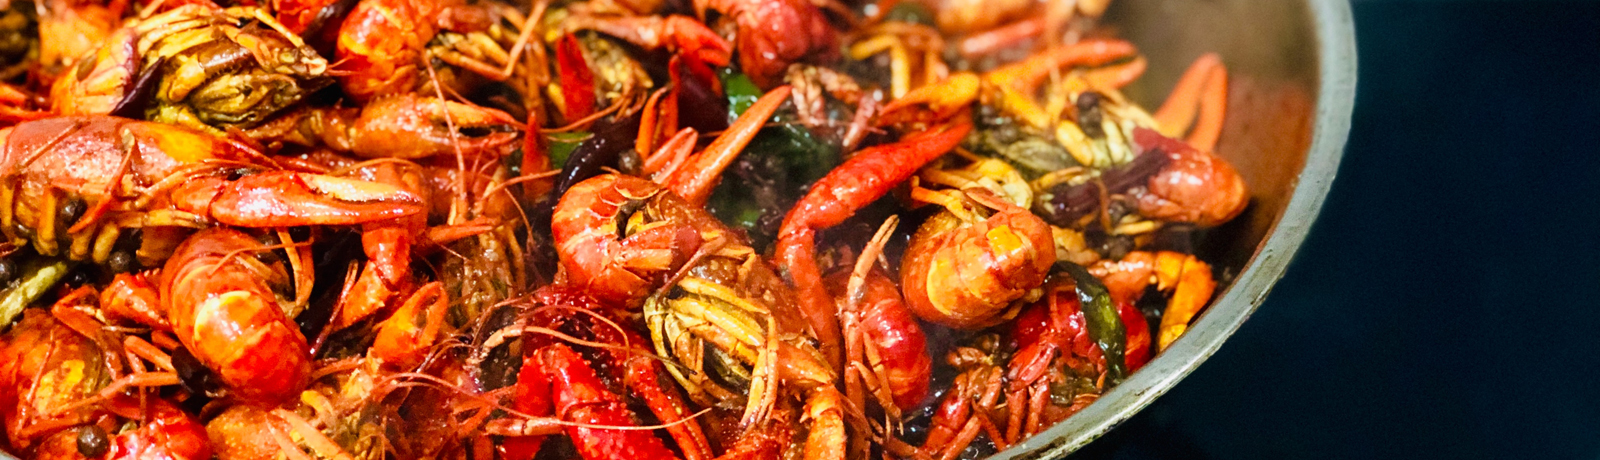 Crustacean Cooking: Maine Lobsters vs. South Carolina Shrimp